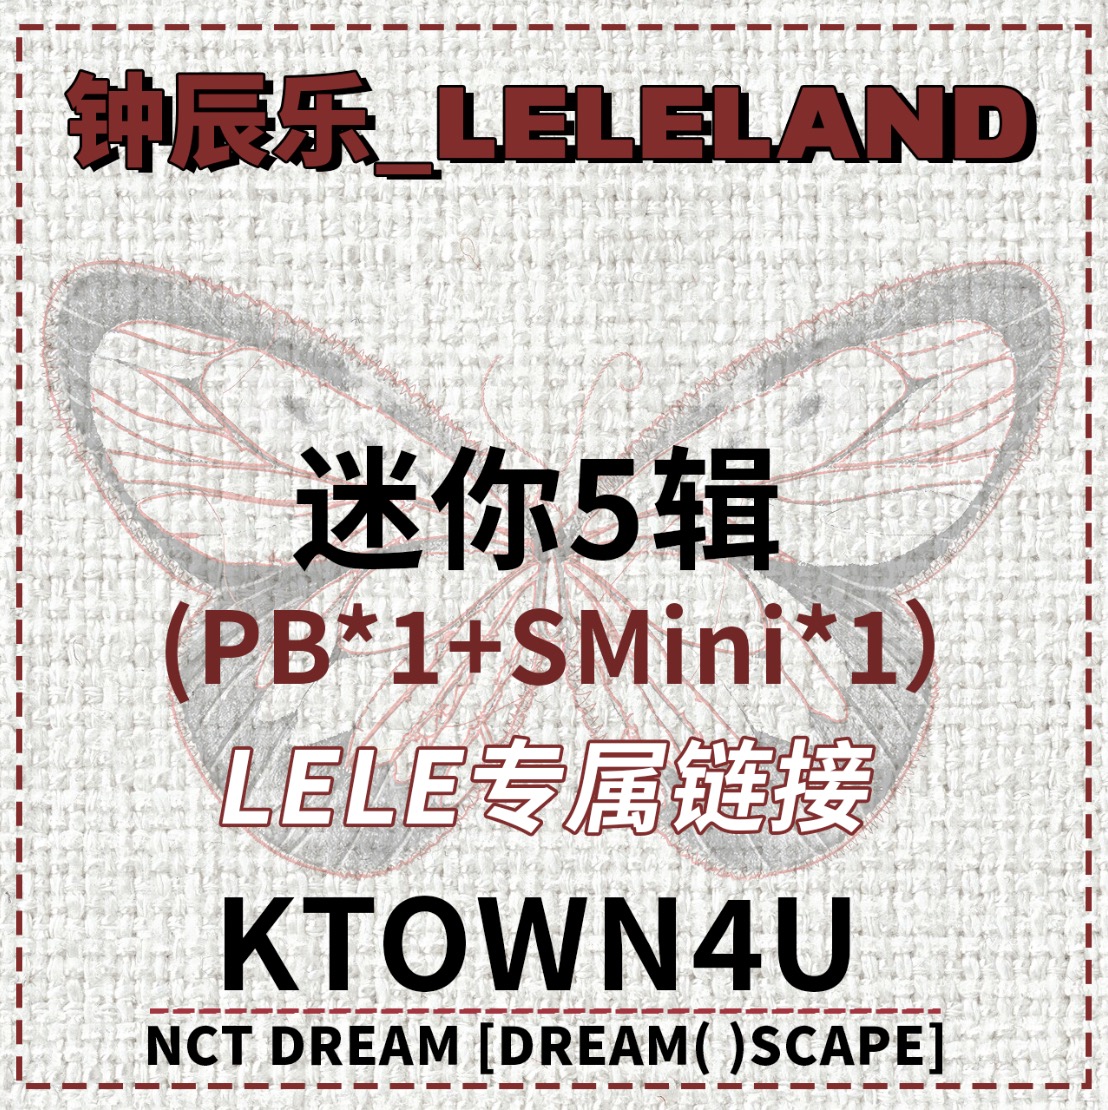 [全款 裸专] [LELELAND专属链接] [Ktown4u特典赠送] [2CD 套装] NCT DREAM - [DREAM( )SCAPE] (Photobook Ver.)+(SMini Ver.)_钟辰乐吧_ChenLeBar